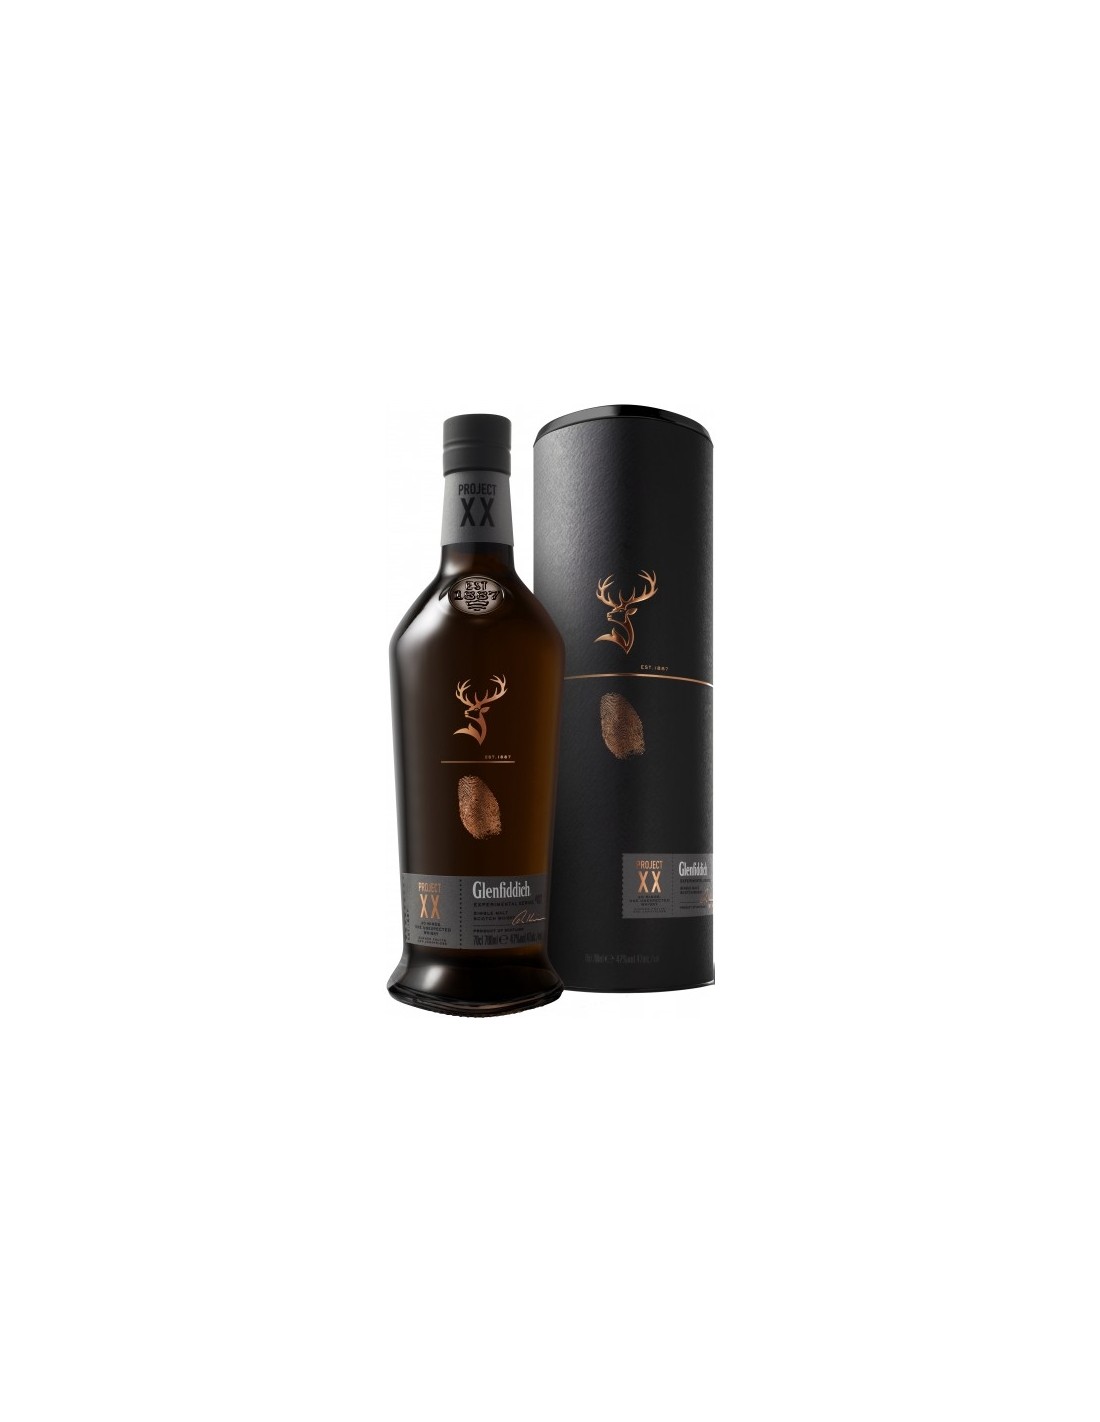 Whisky Glenfiddich Project XX, 47% alc., 0.7L, Scotia